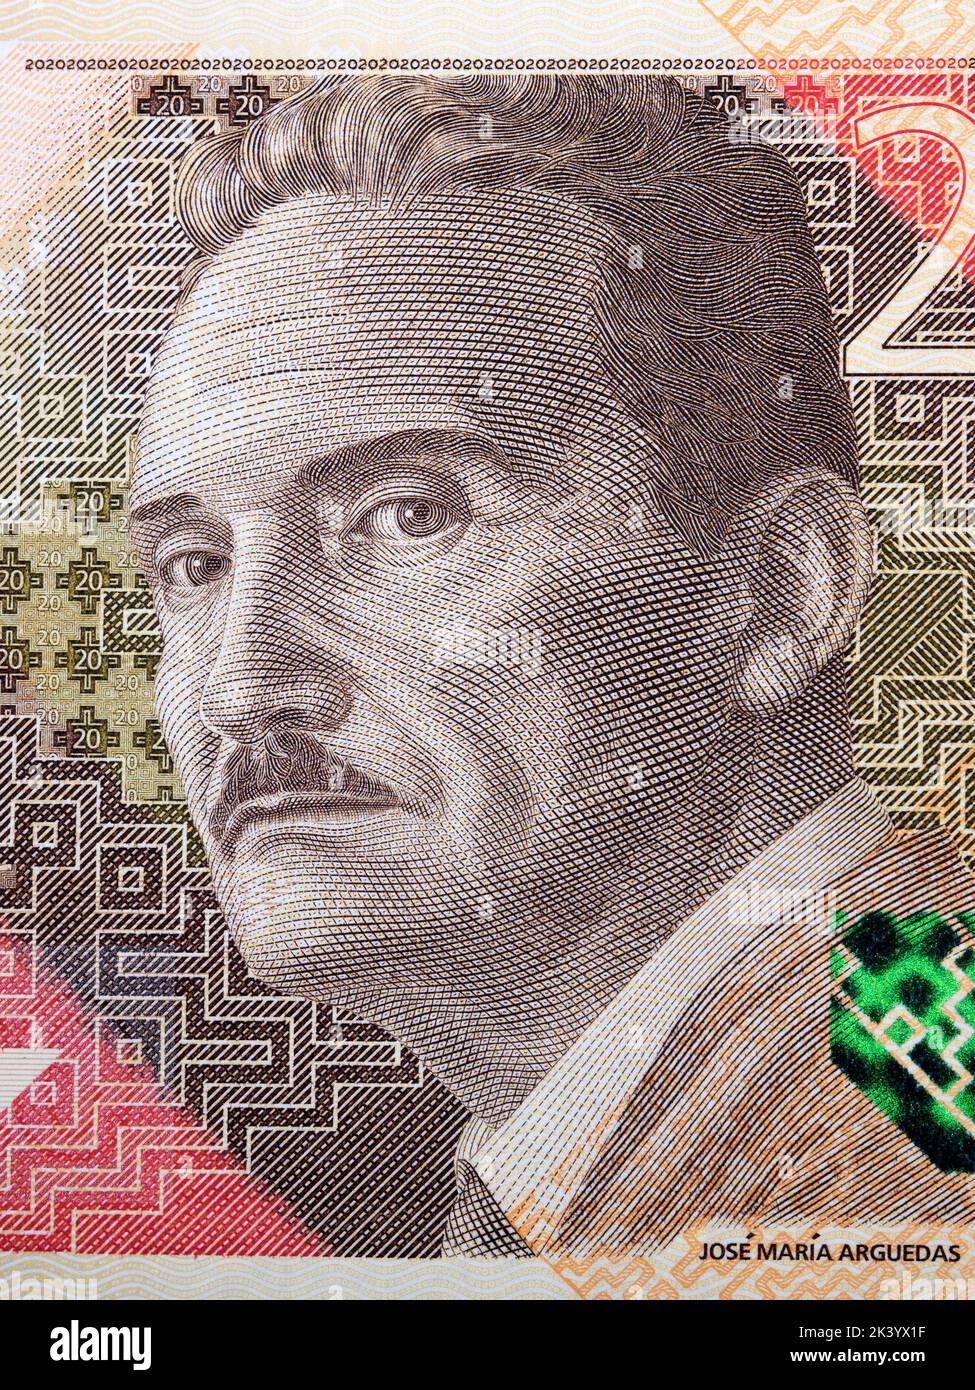 Jose Maria Arguedas a portrait from Peruvian money - Soles Stock Photo